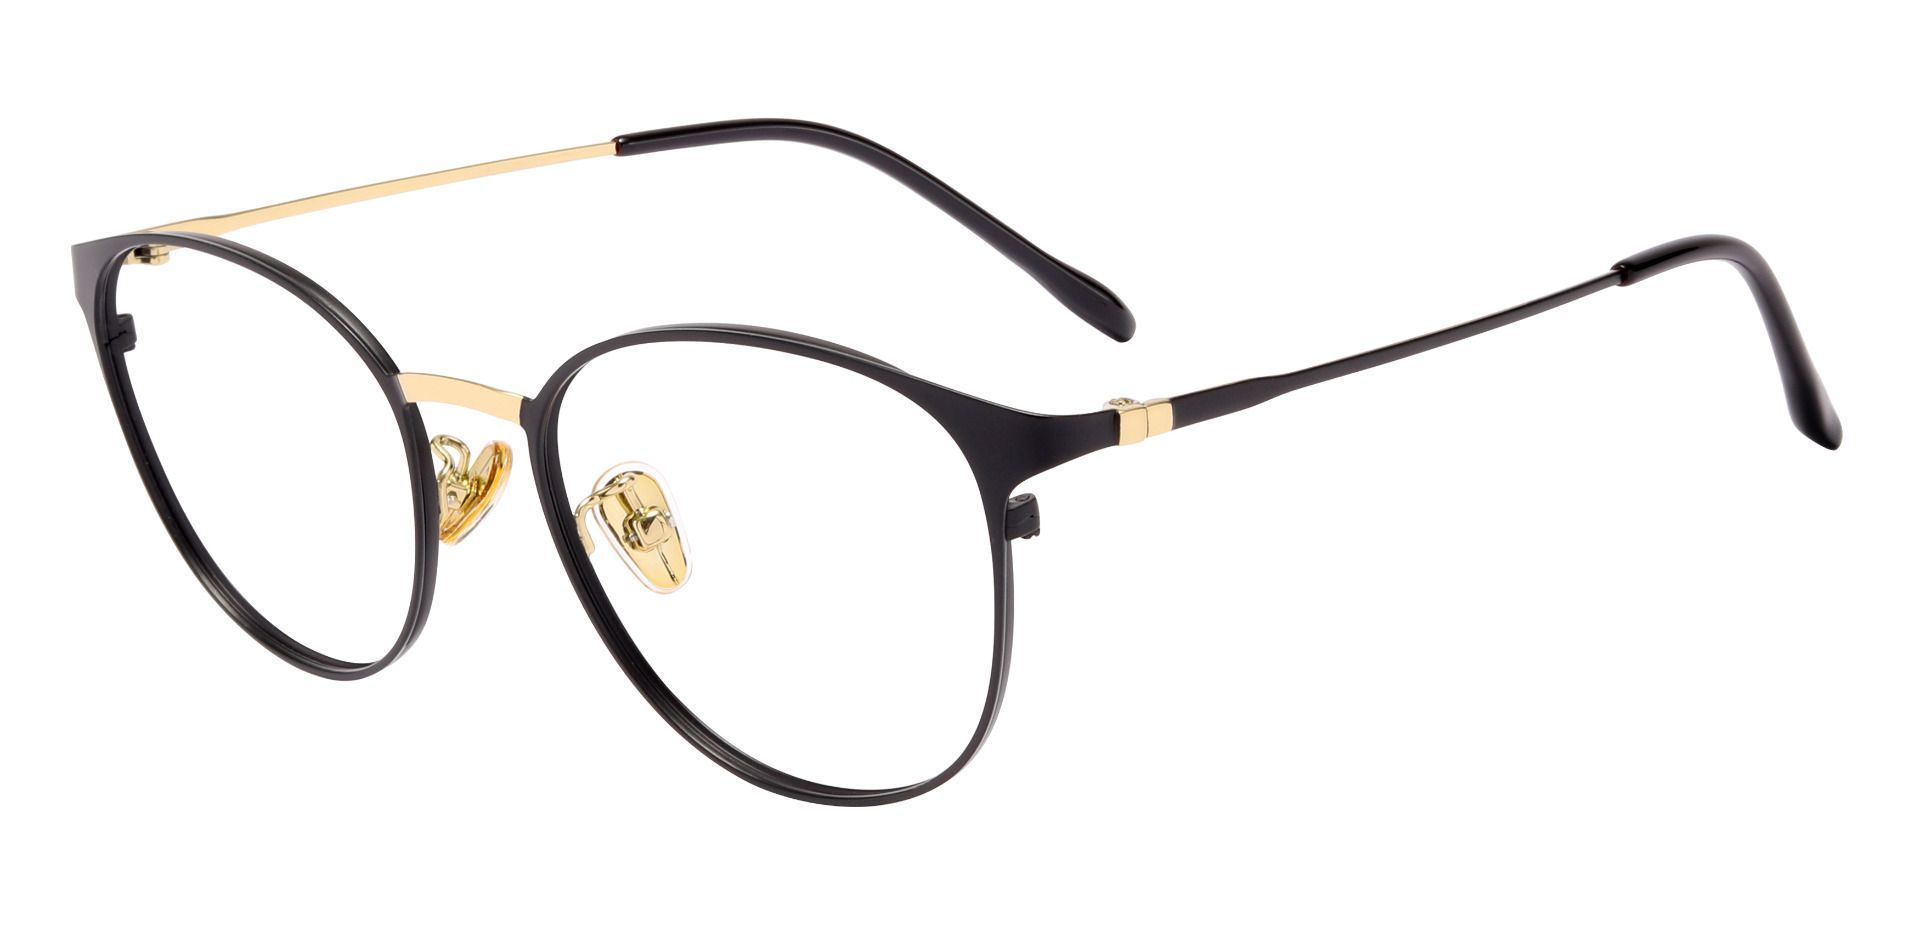 Bertie Oval Eyeglasses Frame - Black